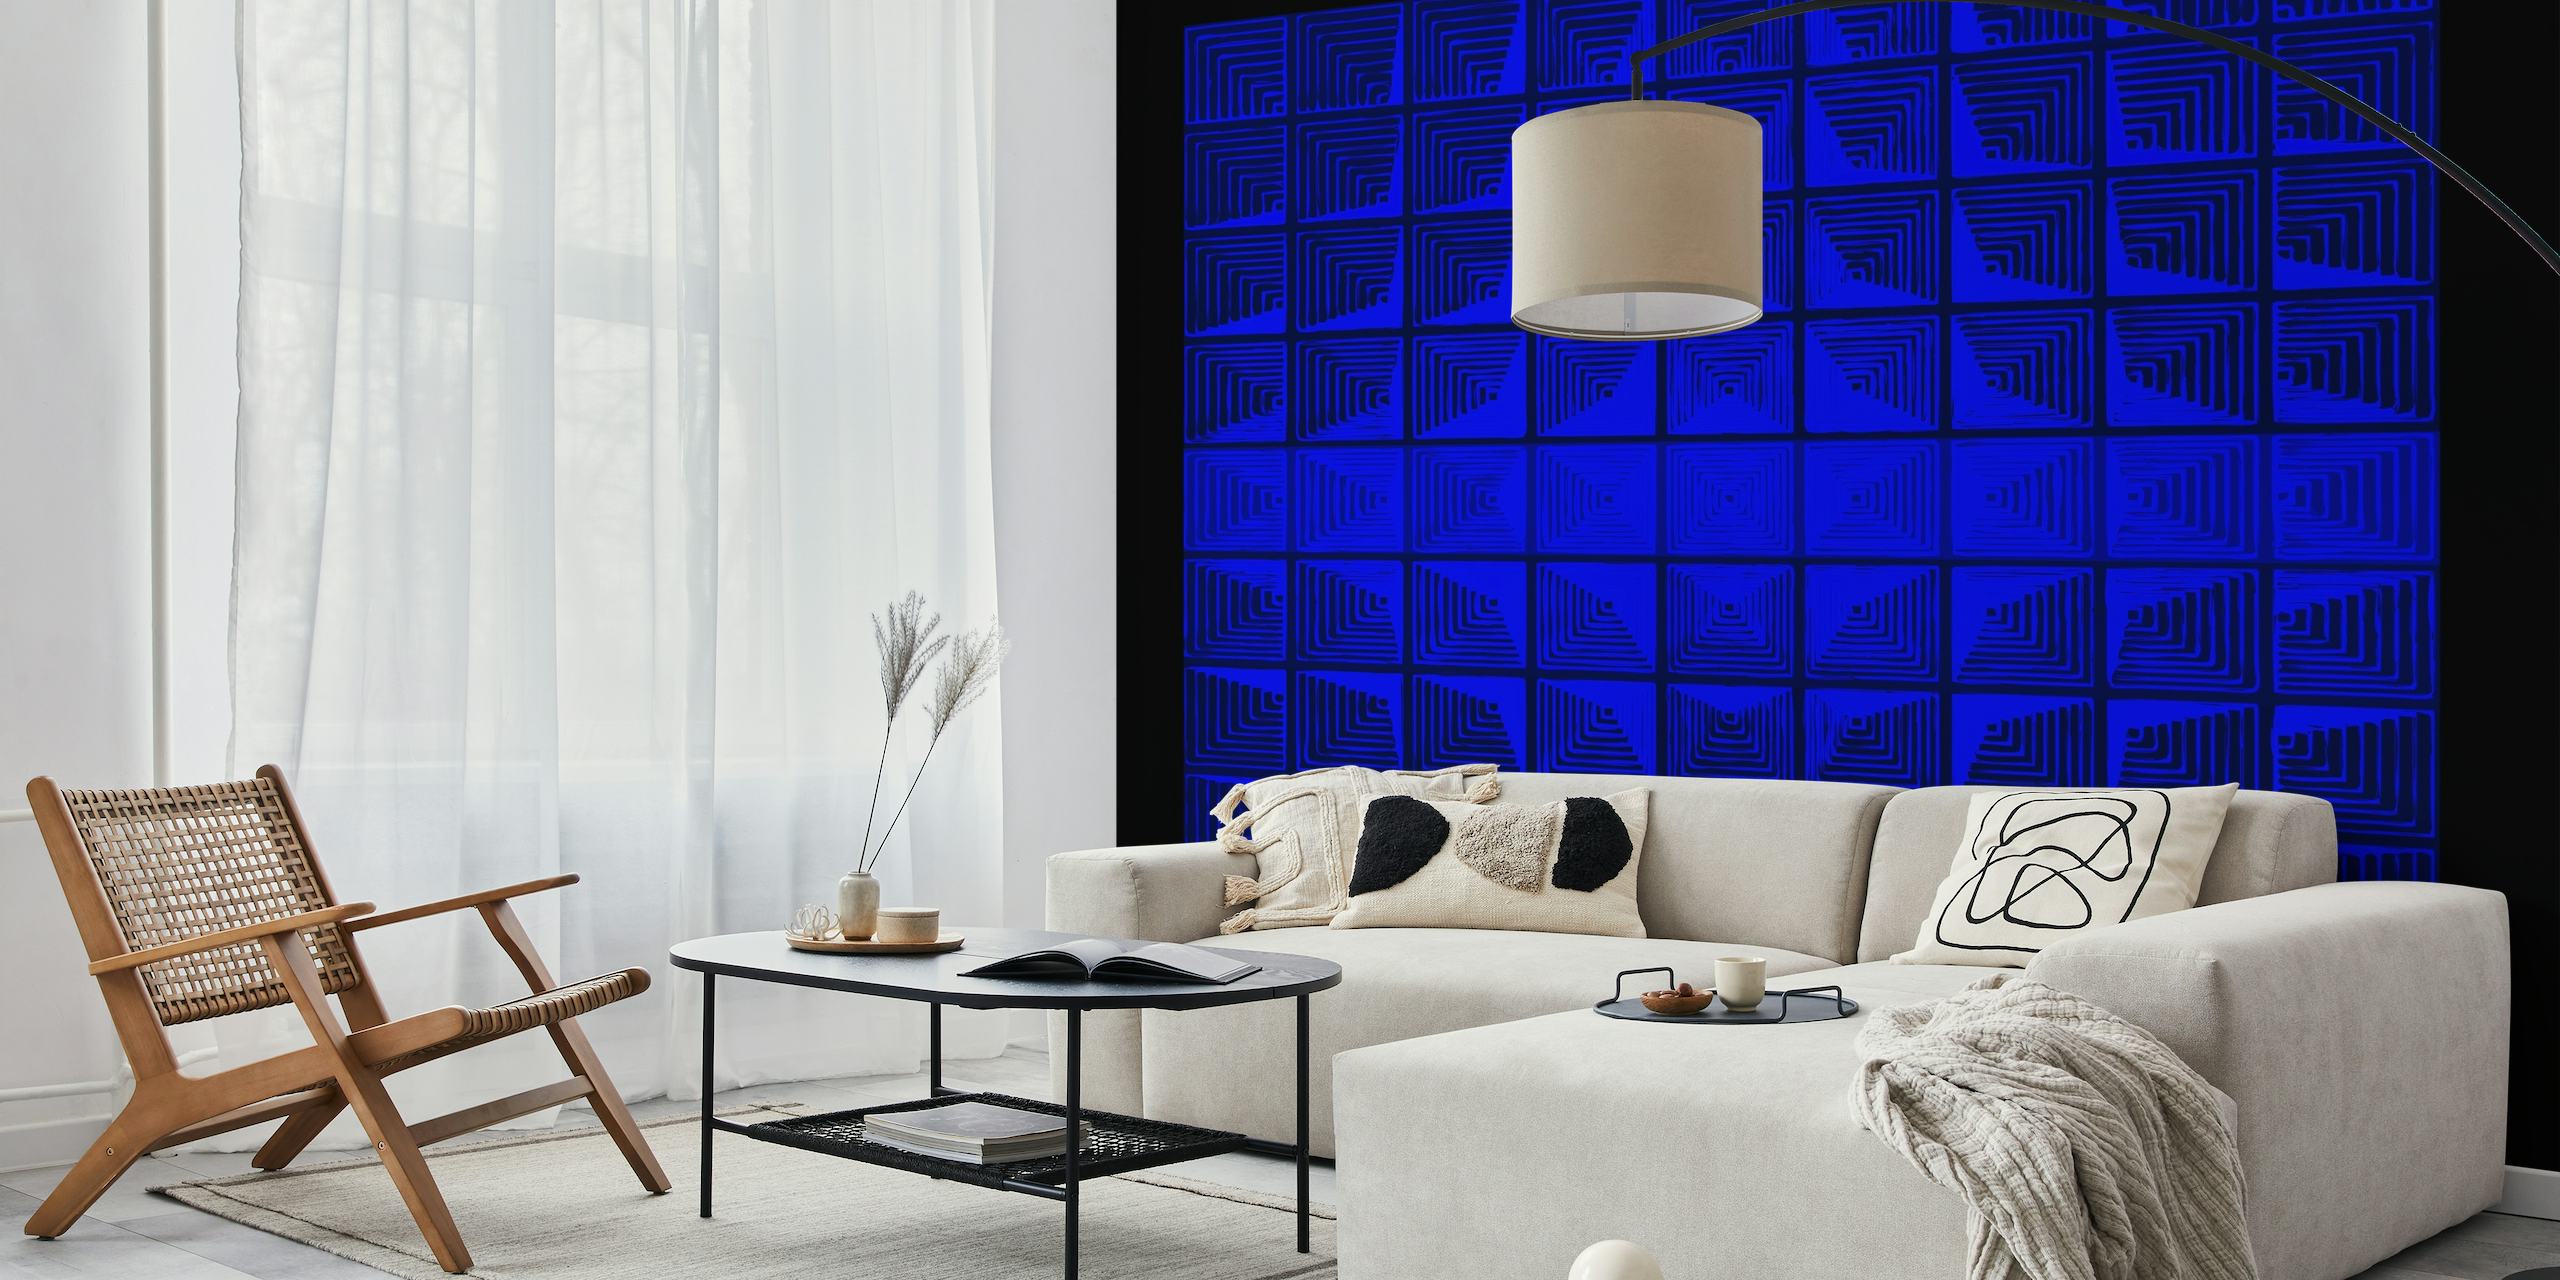 Elegant Verner Panton Retro Blue Wallpaper Design.